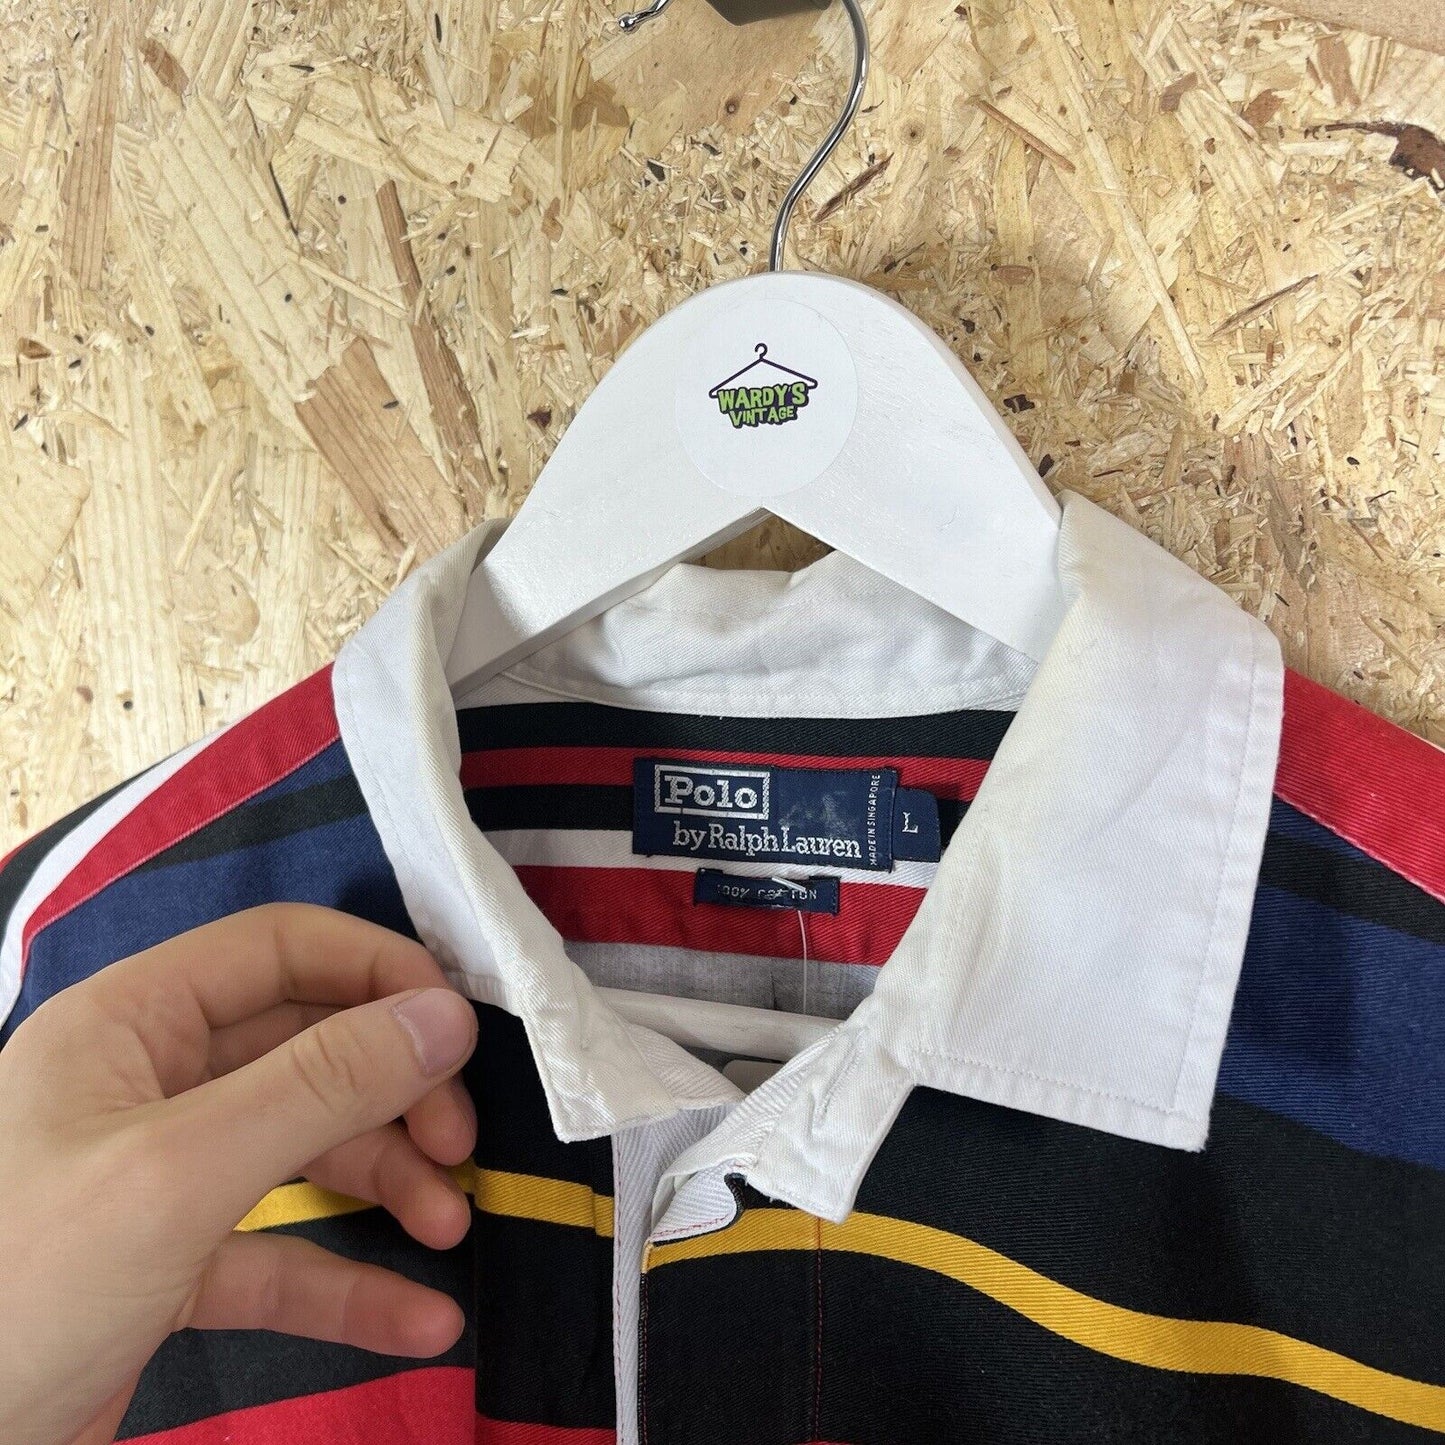 Ralph Lauren Rugby Shirt Striped Retro Men’s XL